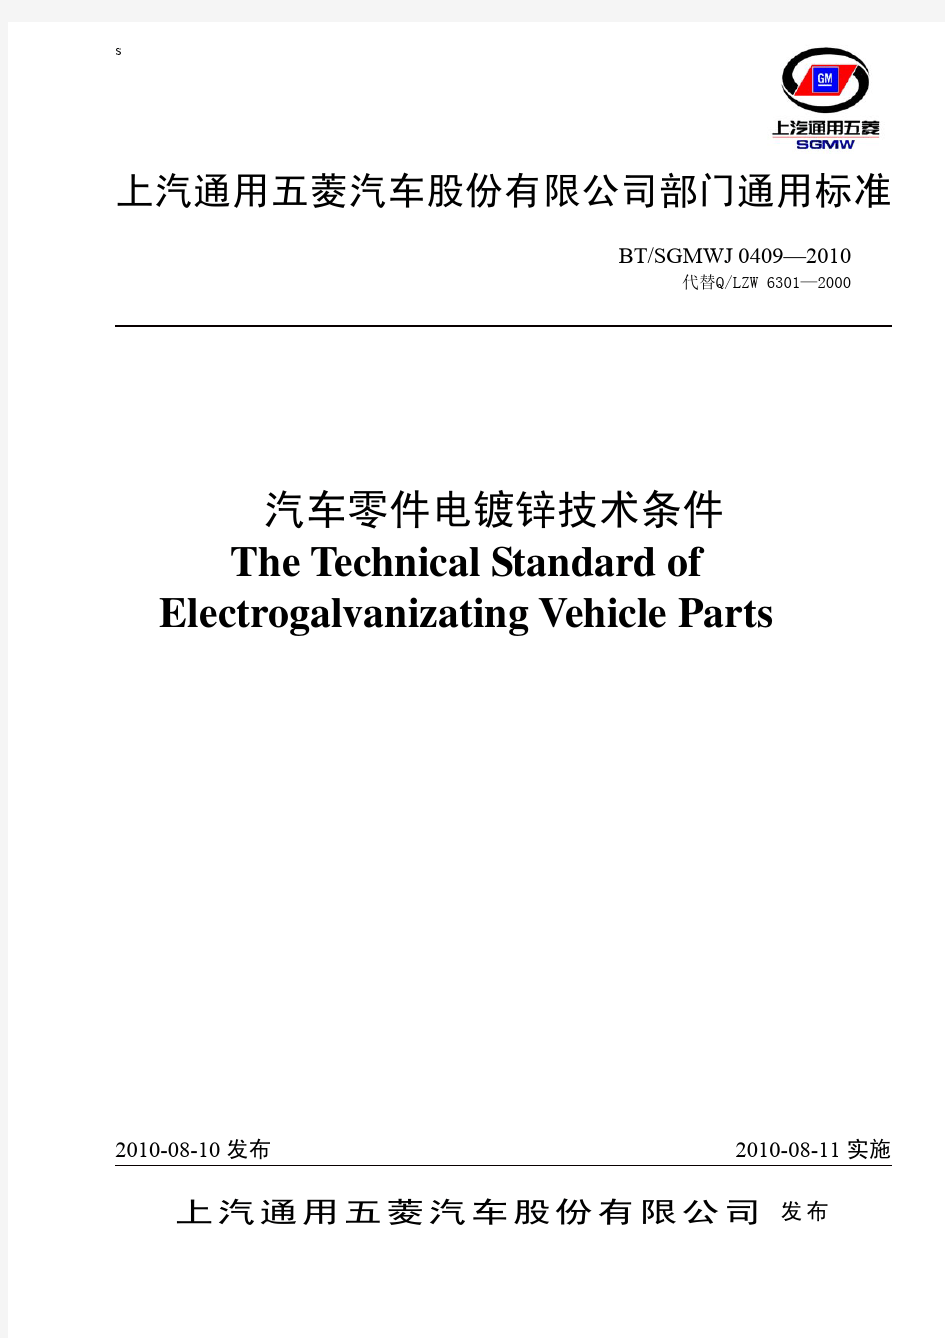 BT-SGMWJ 0409-2010汽车零件电镀锌技术条件(中英)